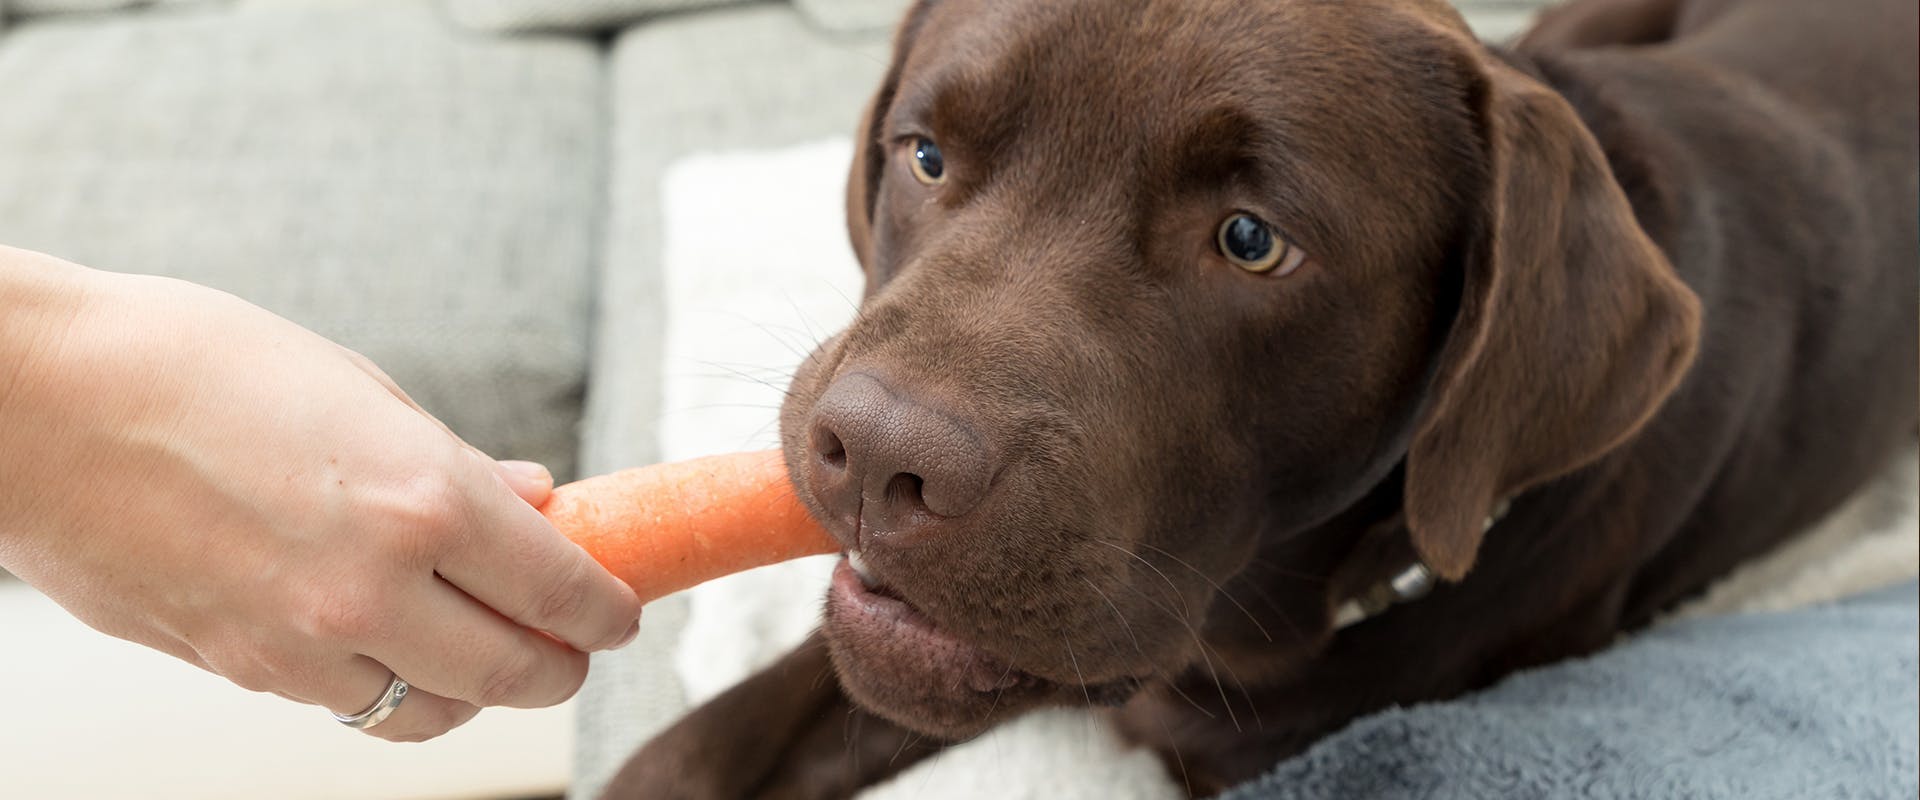 A person feeding a dog a carrot